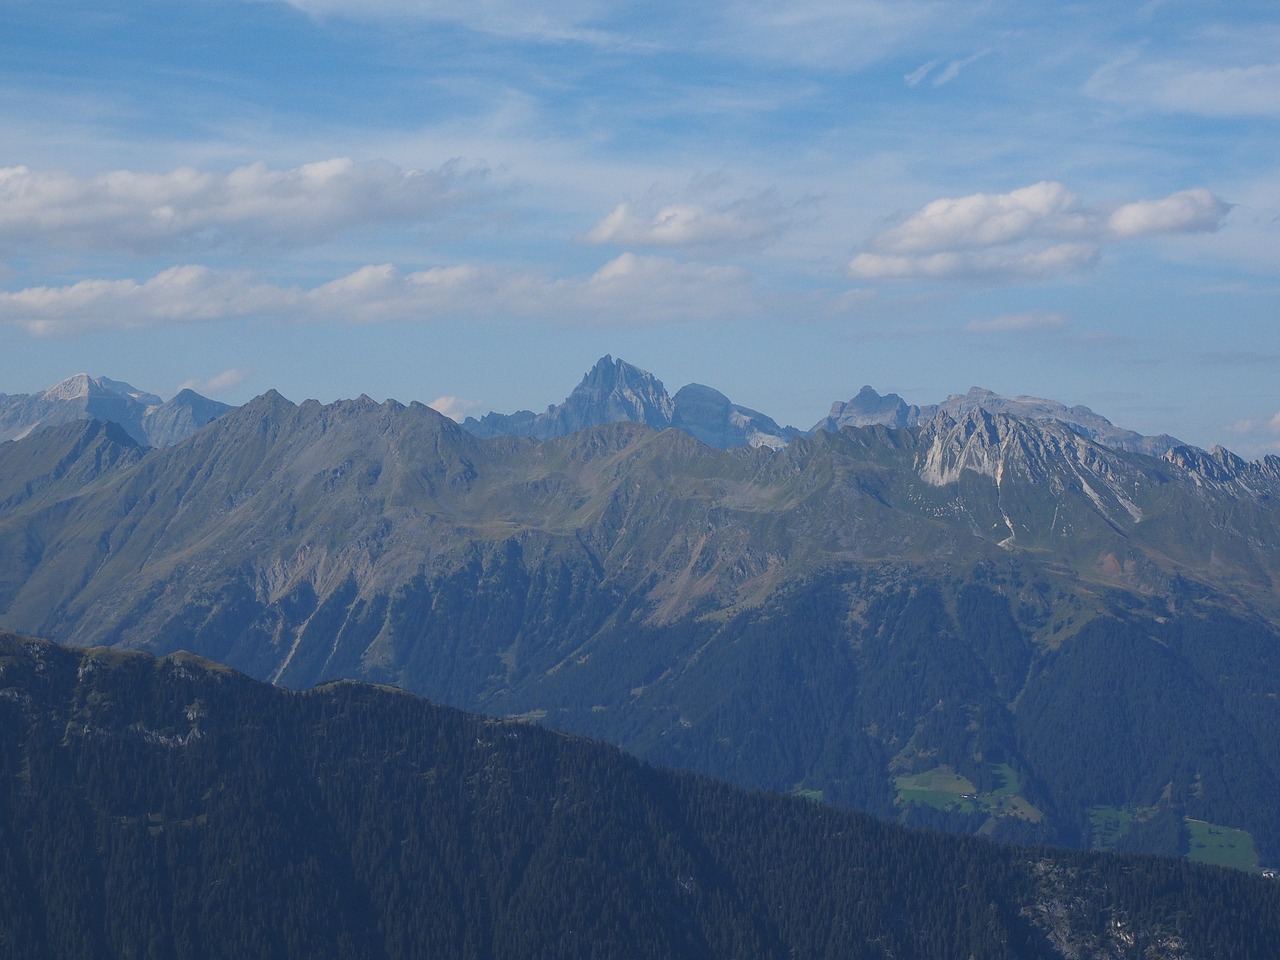 Jaufenspitze, Kalnai, Vaizdas, Balta Siena, Aukštas Dantis, Orų Patarimas, Pflerscher Tribulaun, Gschnitzer Tribulaun, Tribulaun, Stubai Alps